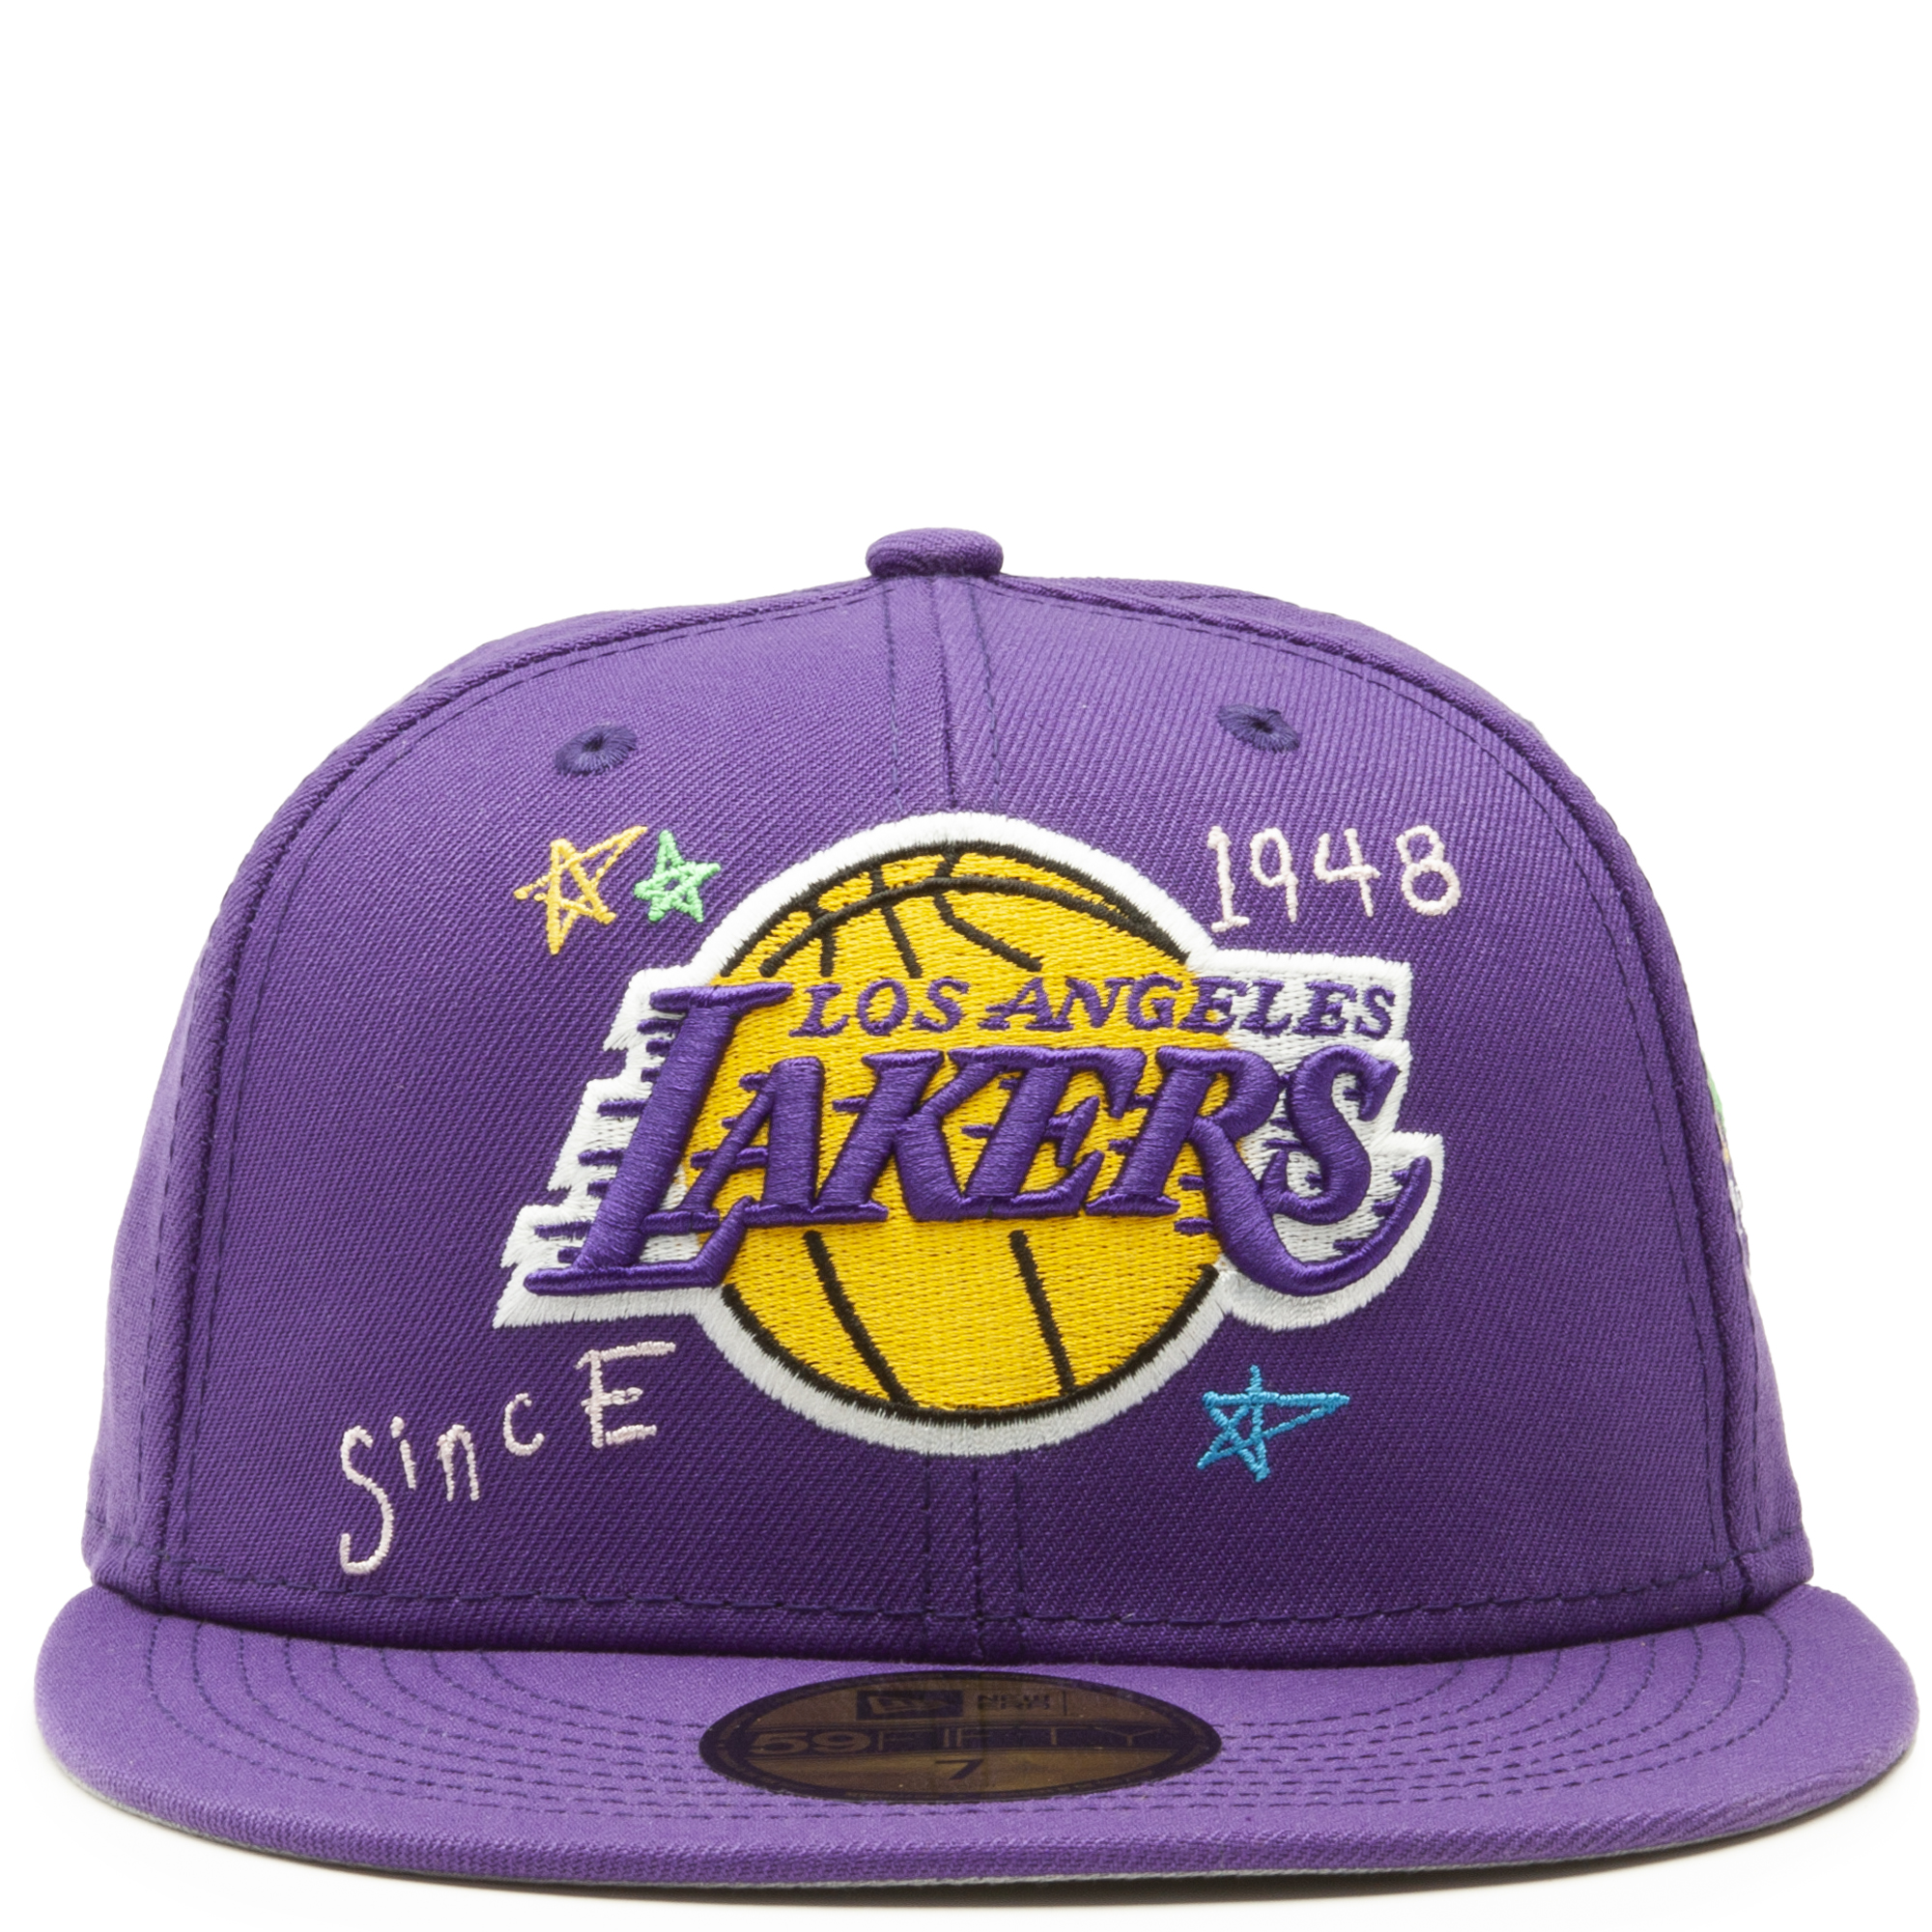 NEW ERA - Accessories - LA Lakers 950 Stacked Snapback - Purple - Nohble